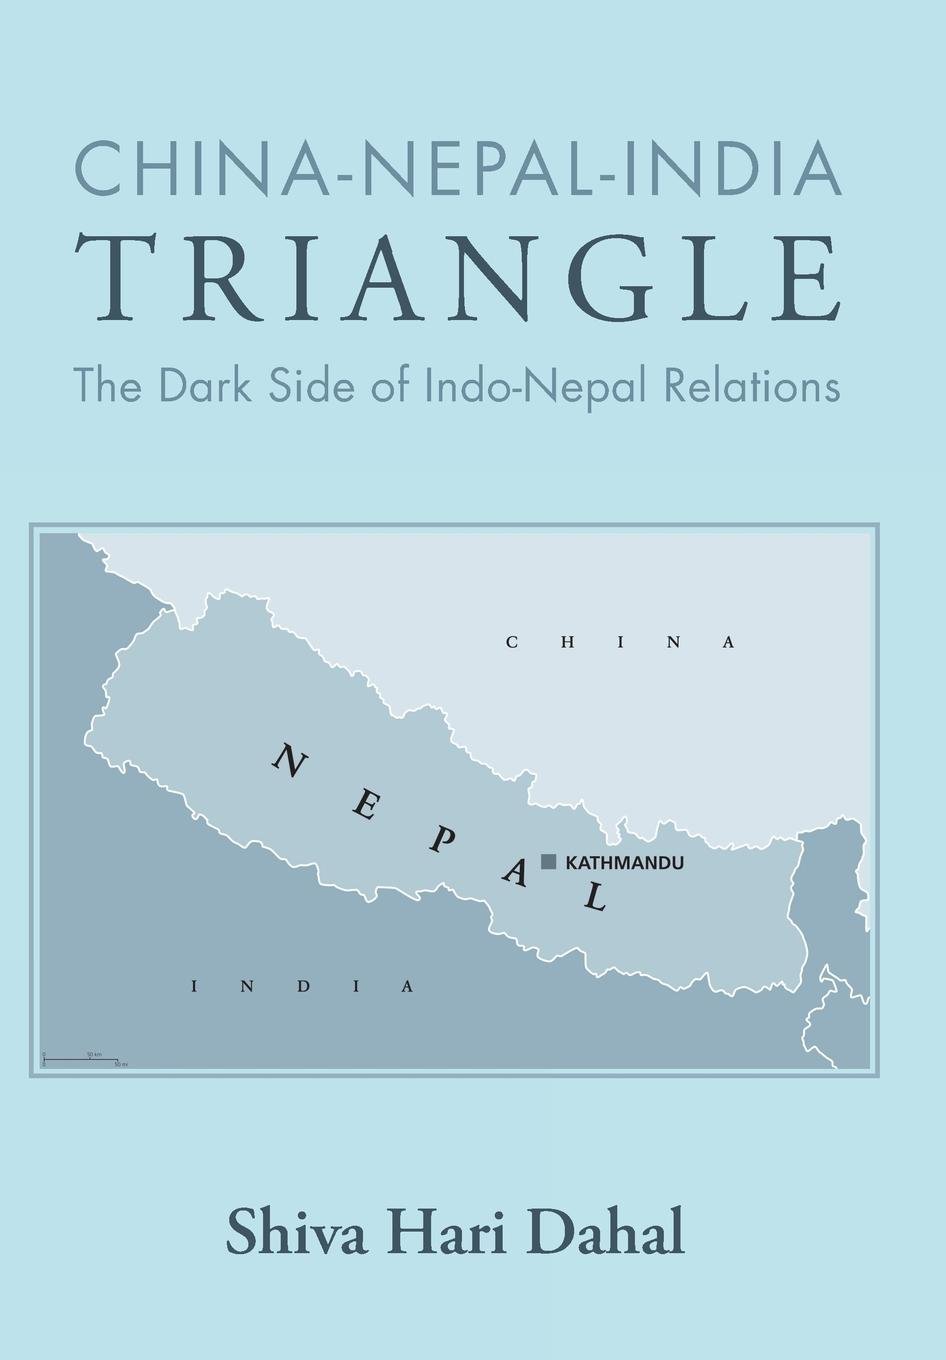 CHINA-NEPAL-INDIA TRIANGLE